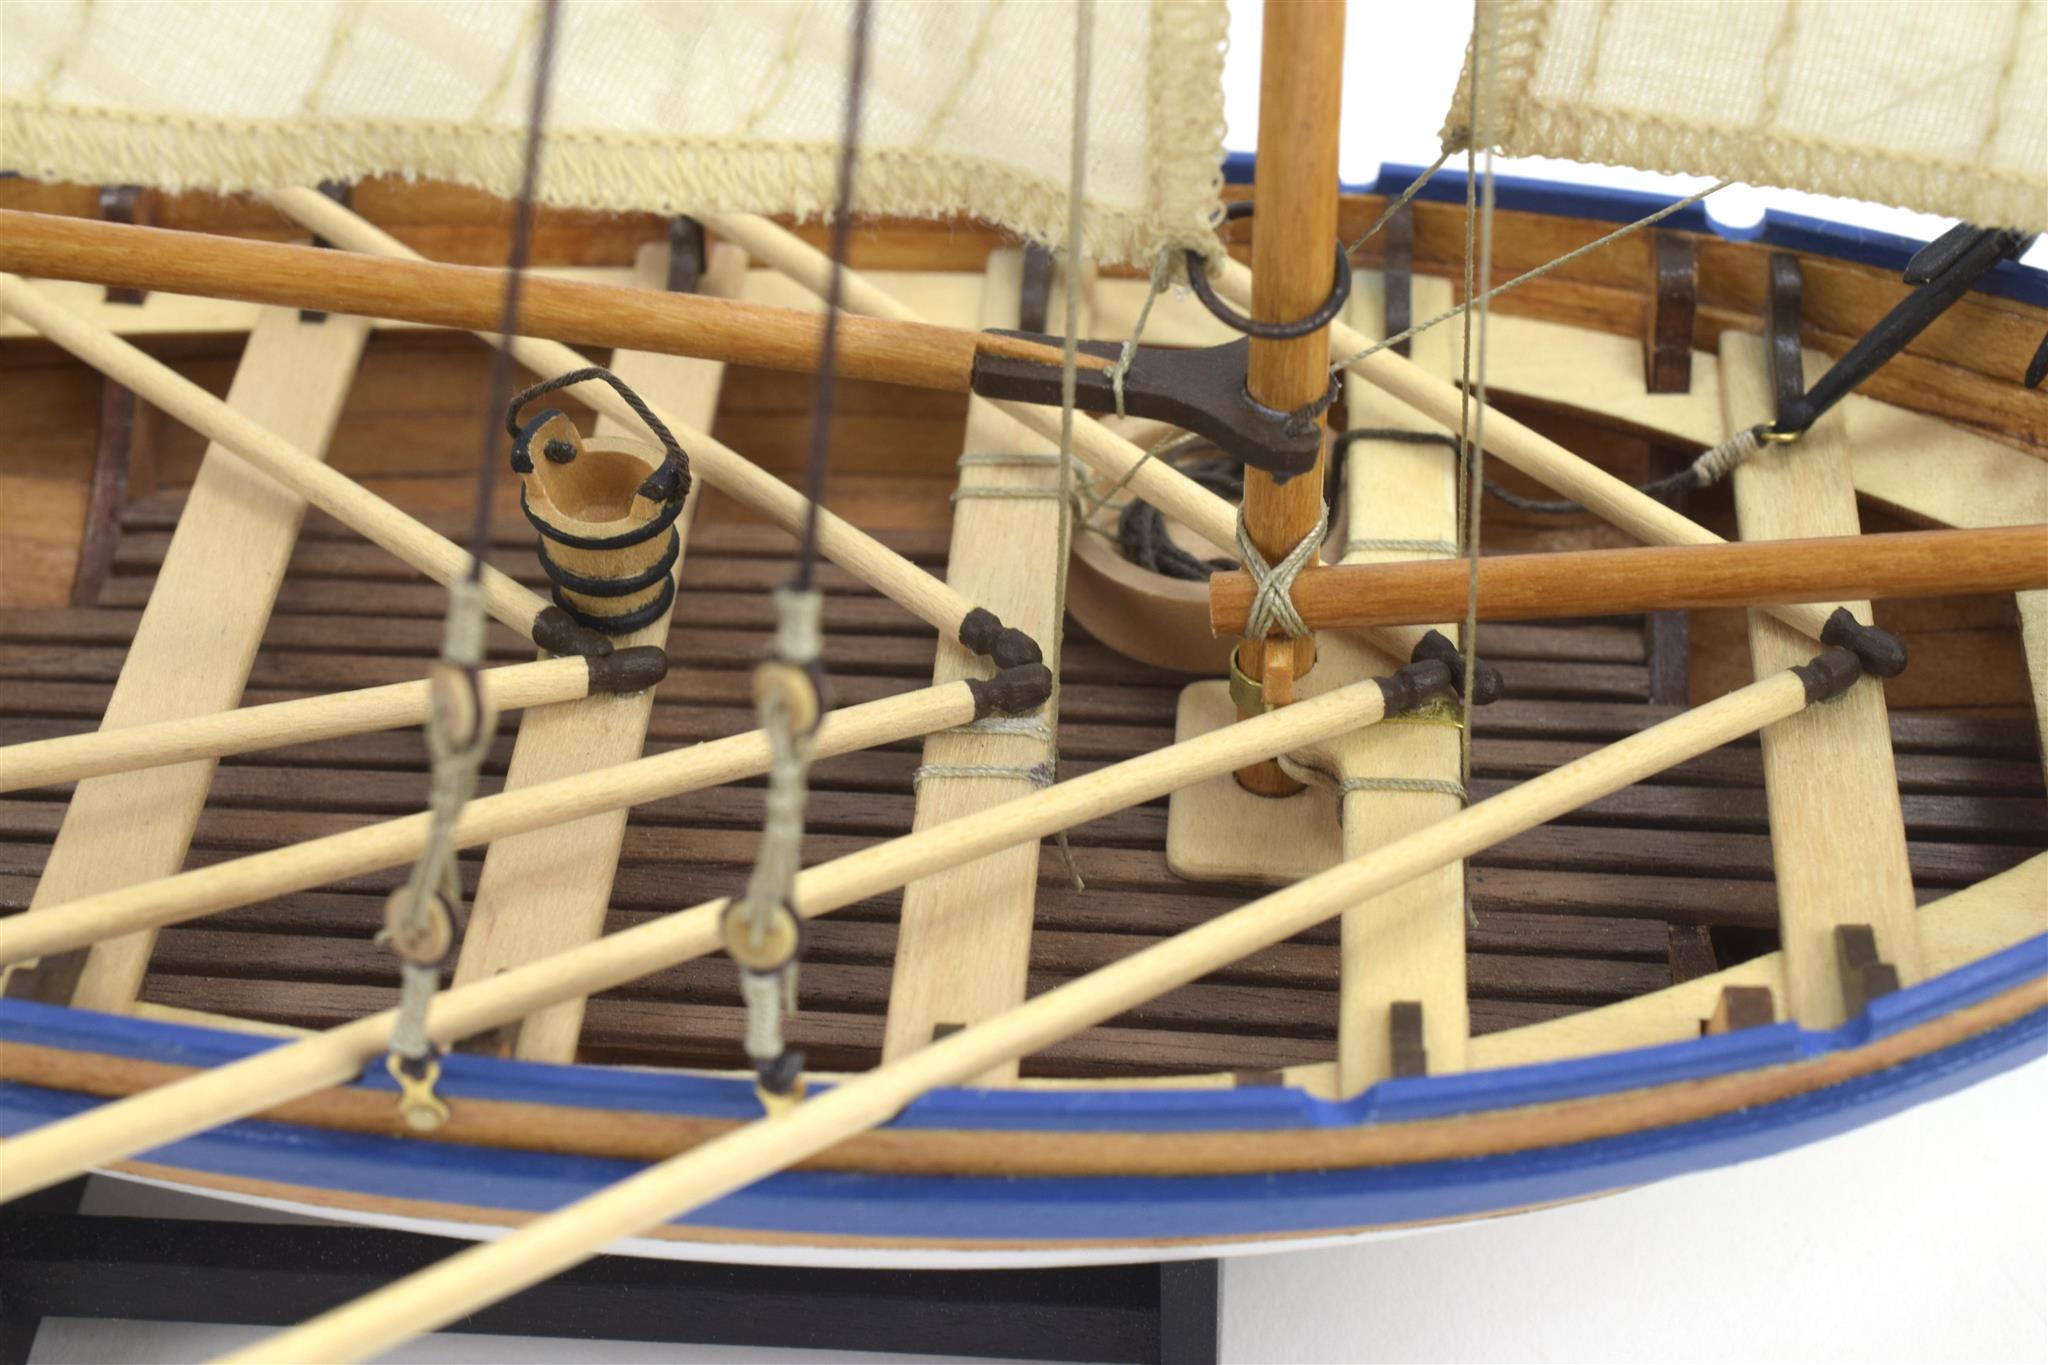 Bounty Jolly Boat Model (19004-N). 1:25 Scale Modeling Ship Kit in Wood by Artesanía Latina.